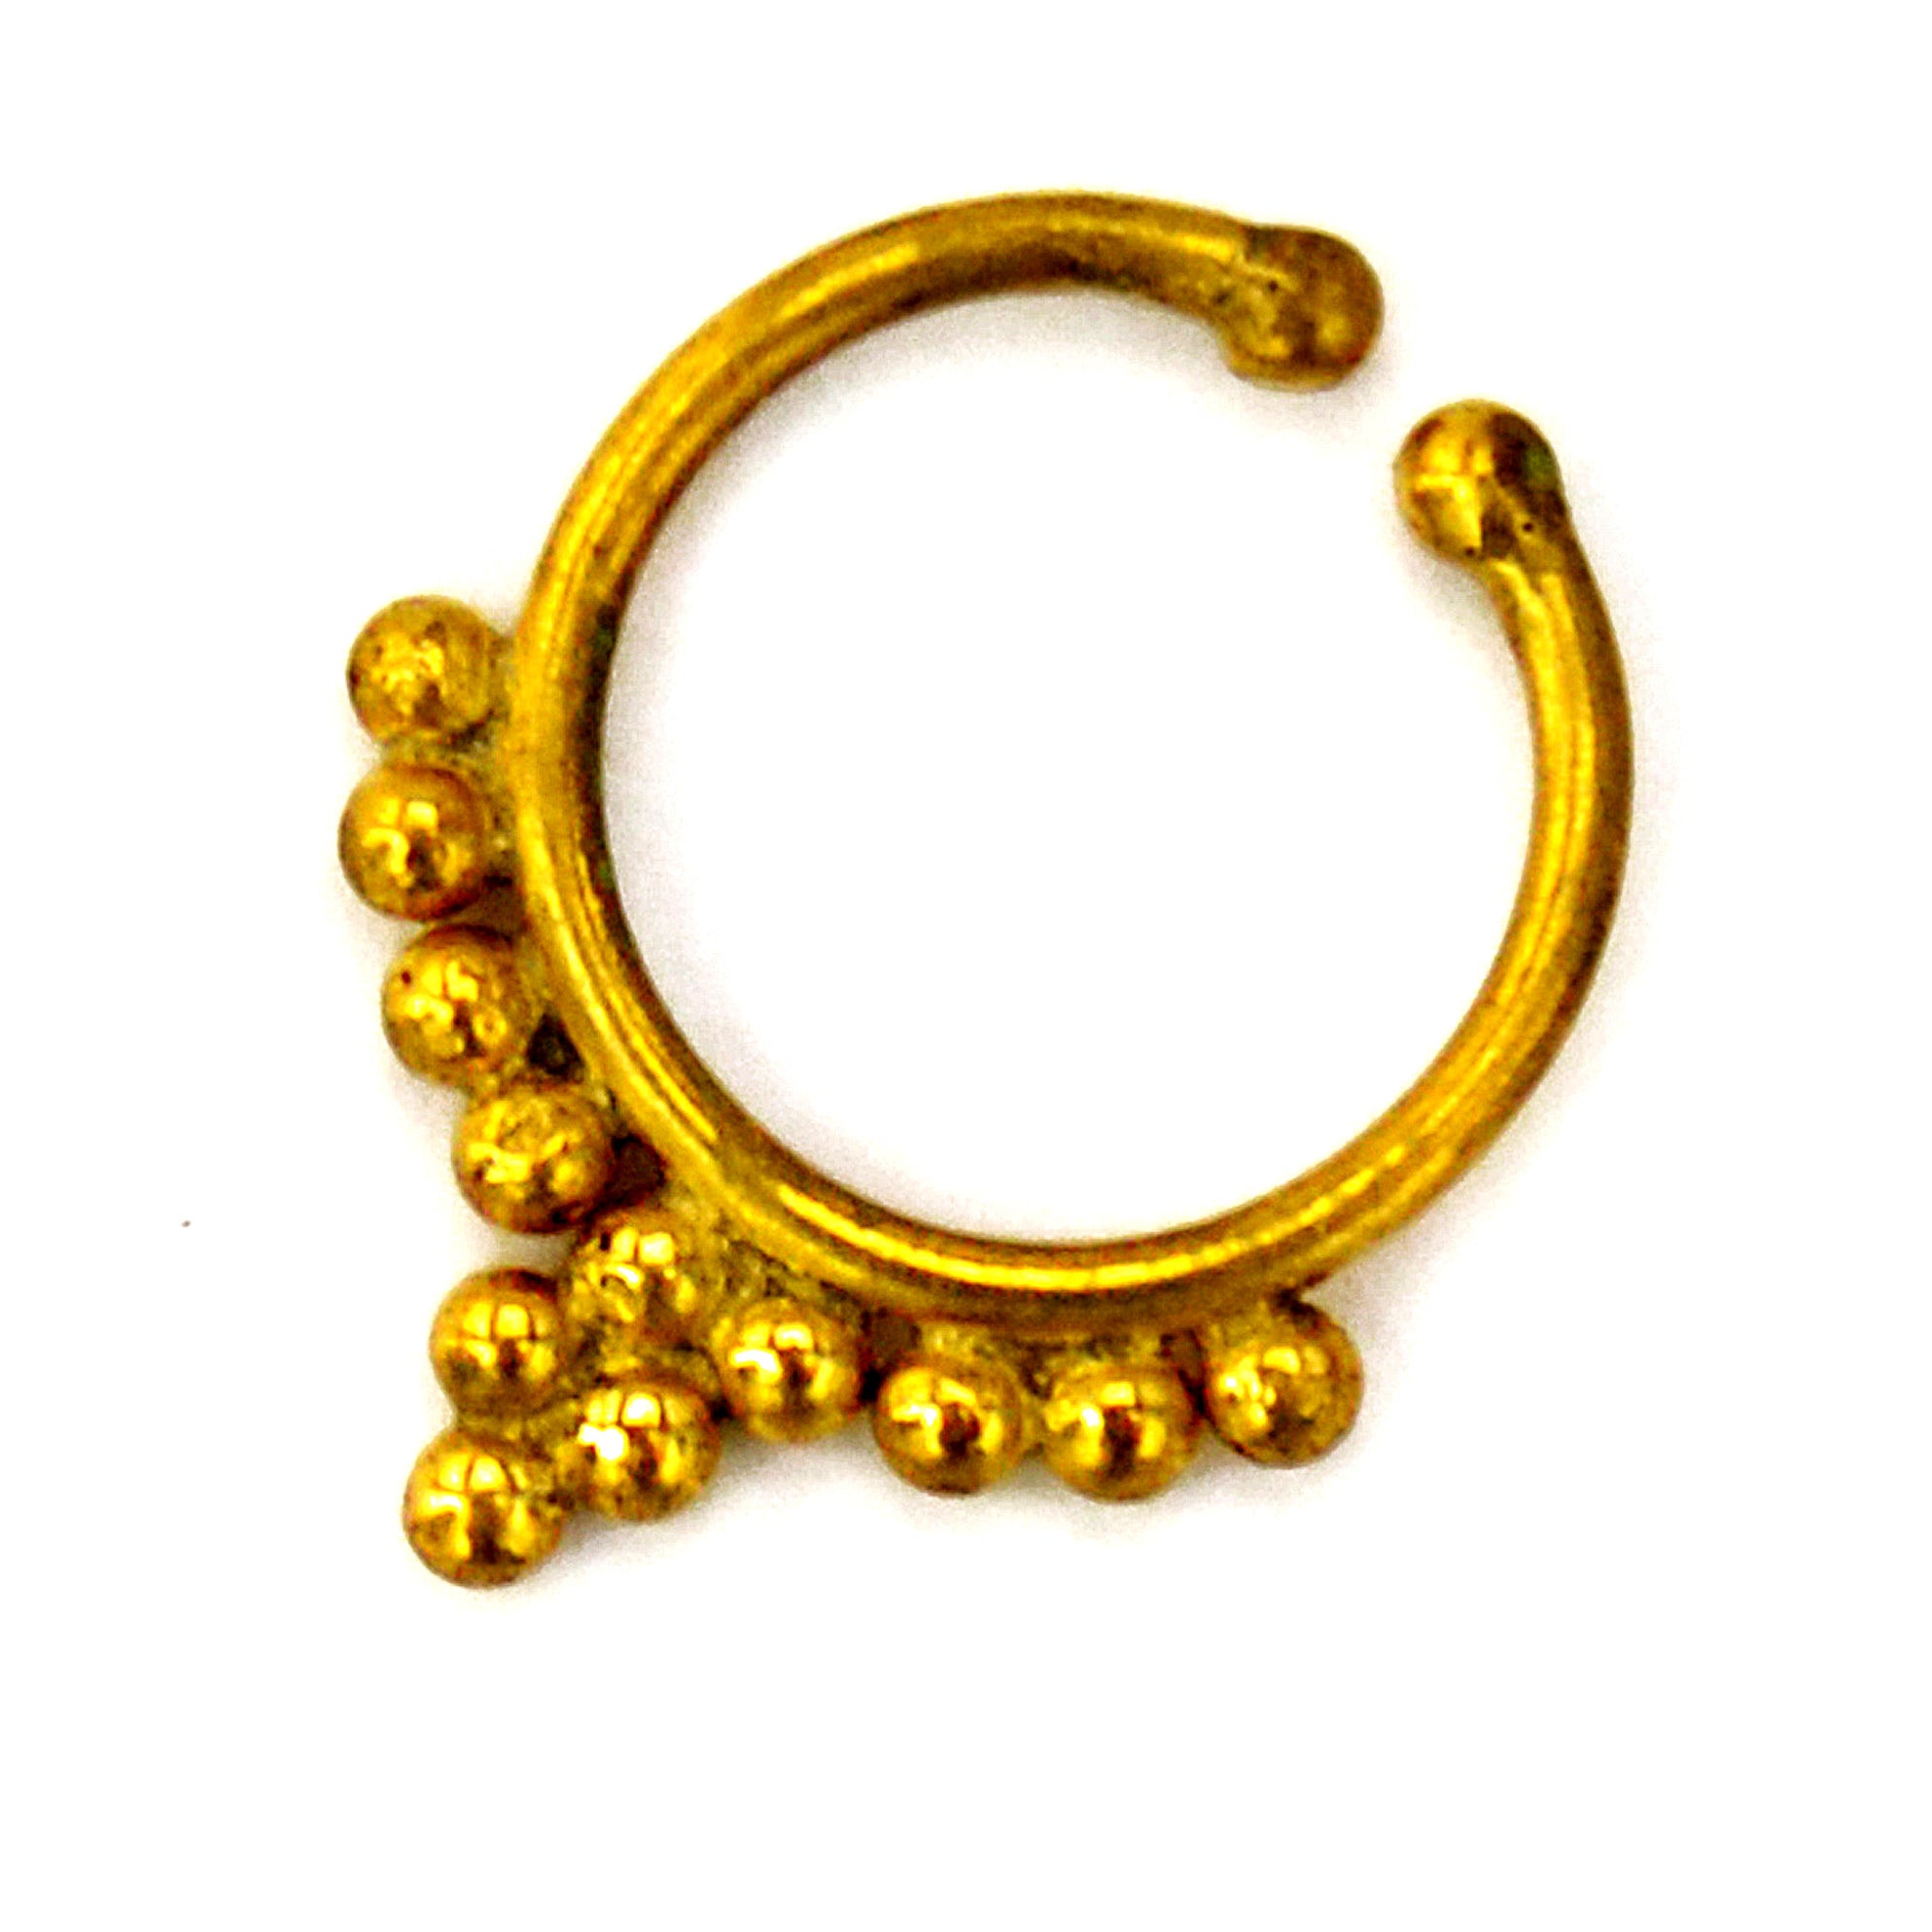 Rajastanhi septum ring